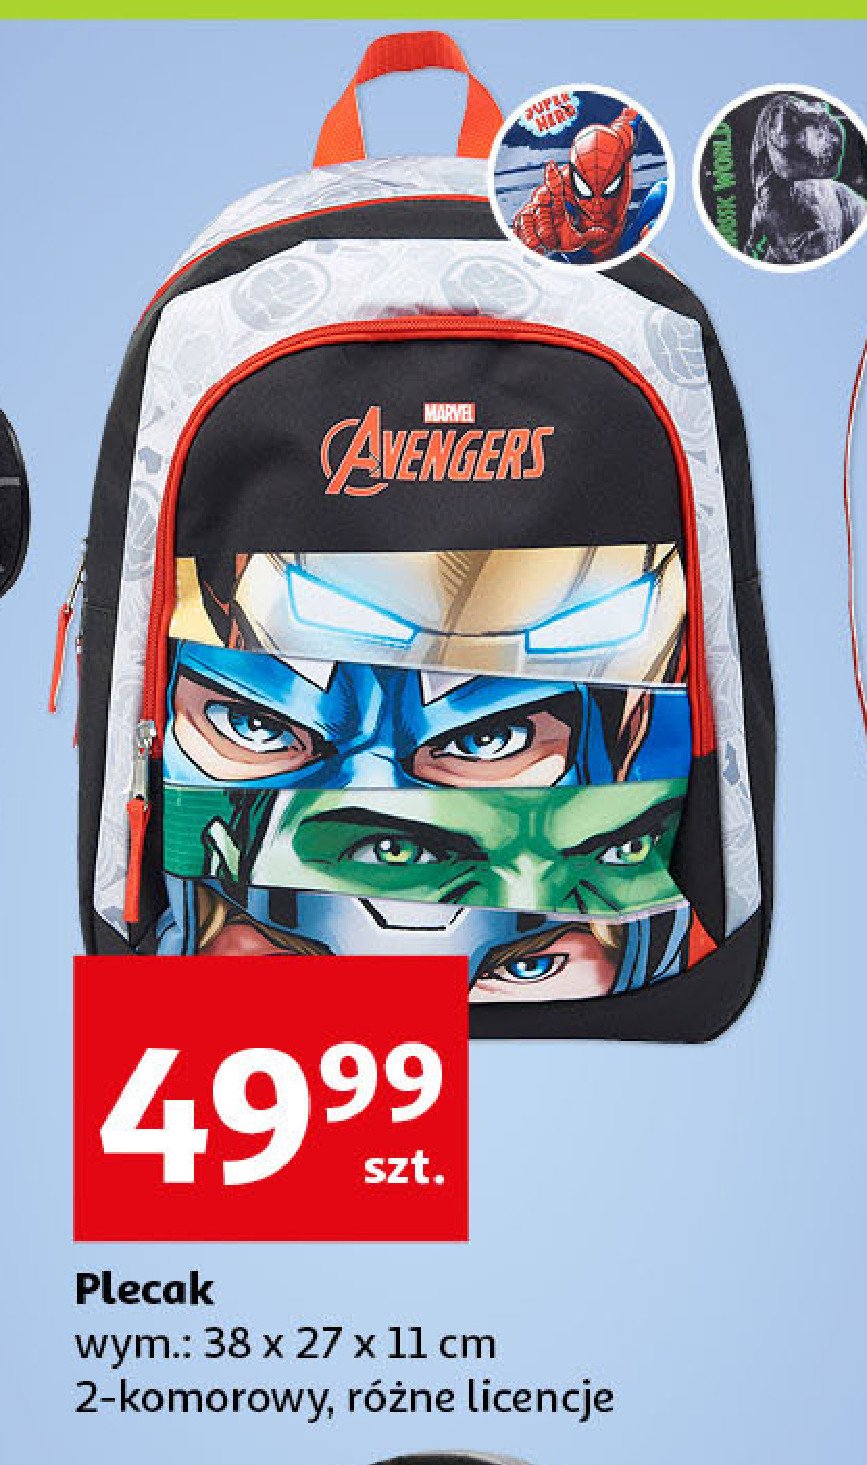 Plecak avengers Auchan promocja